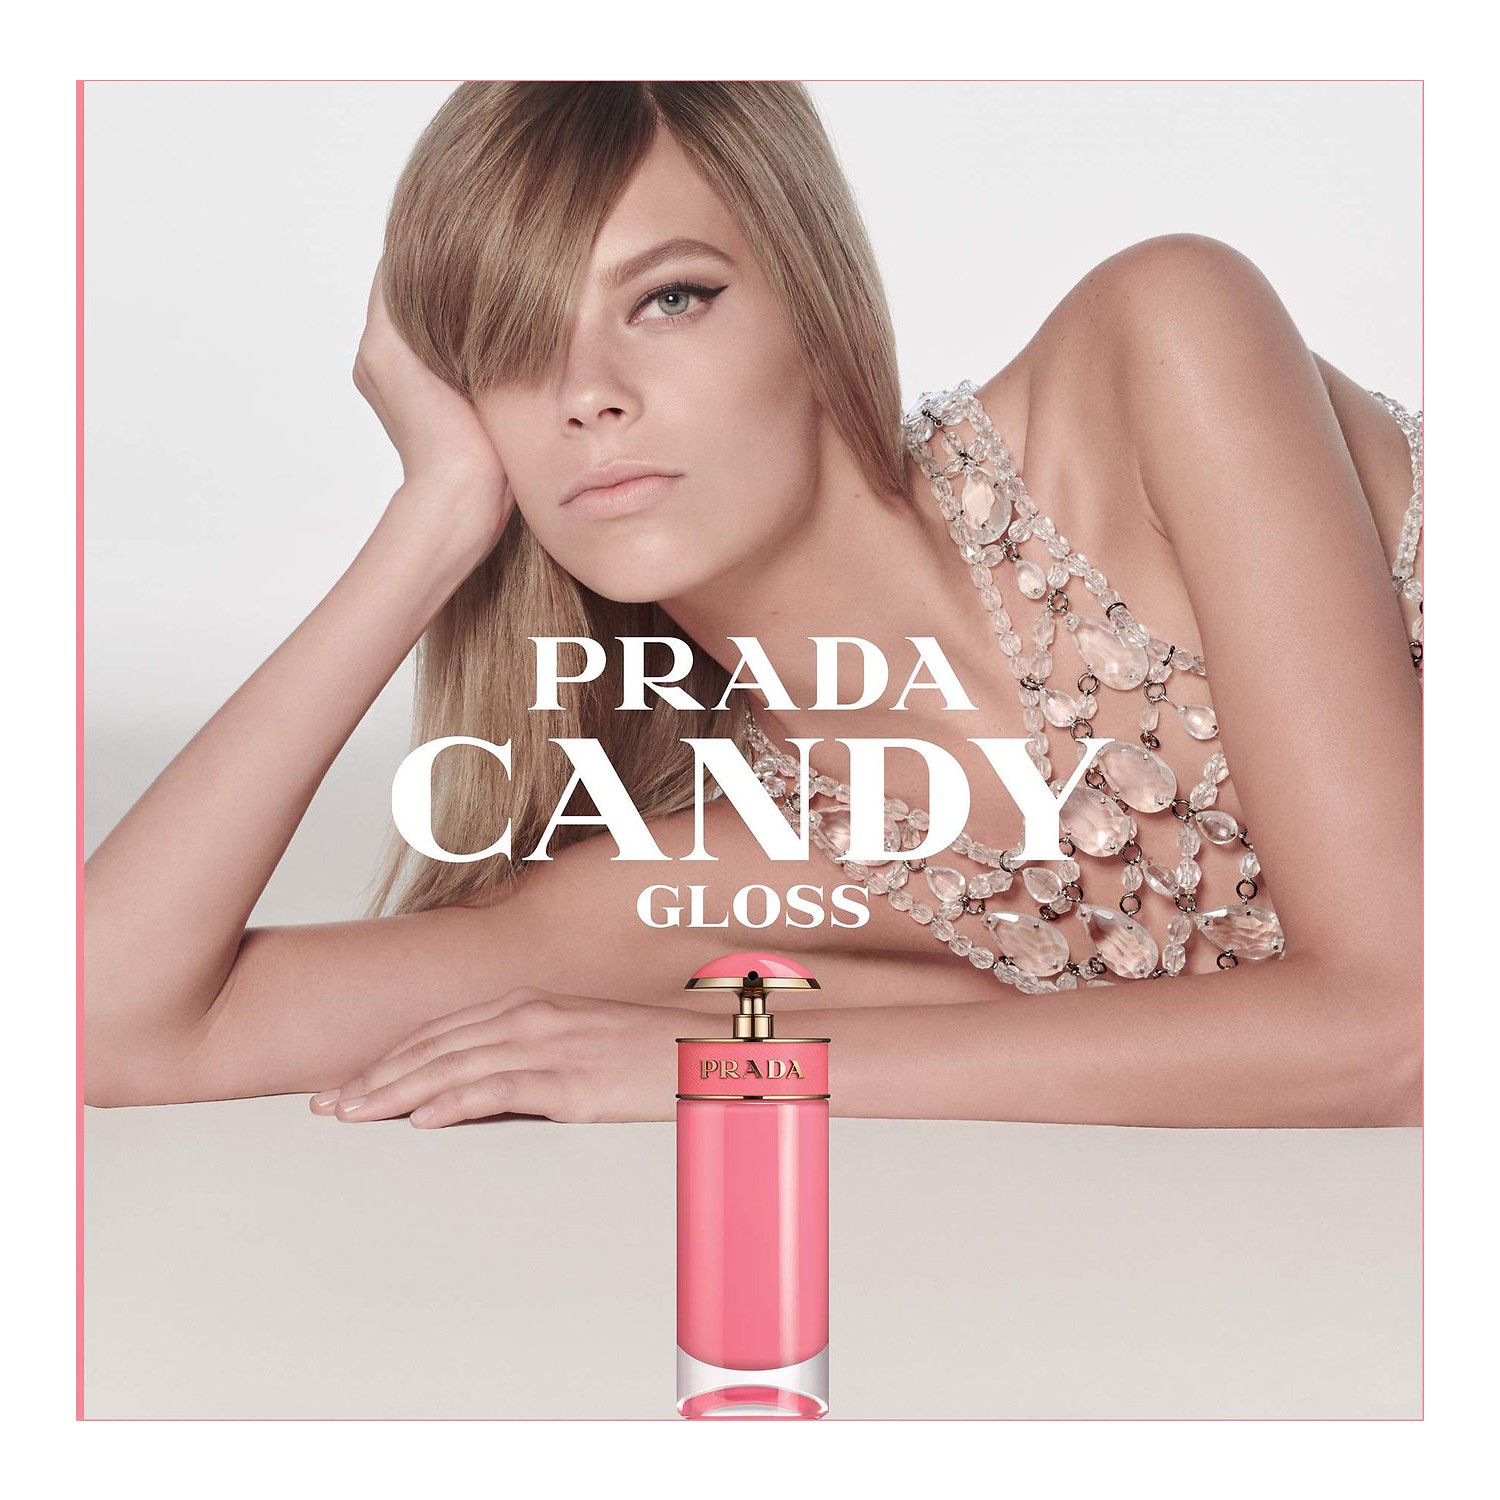 Prada Candy Gloss Edt 80 Ml Kadın Parfüm Fiyatı